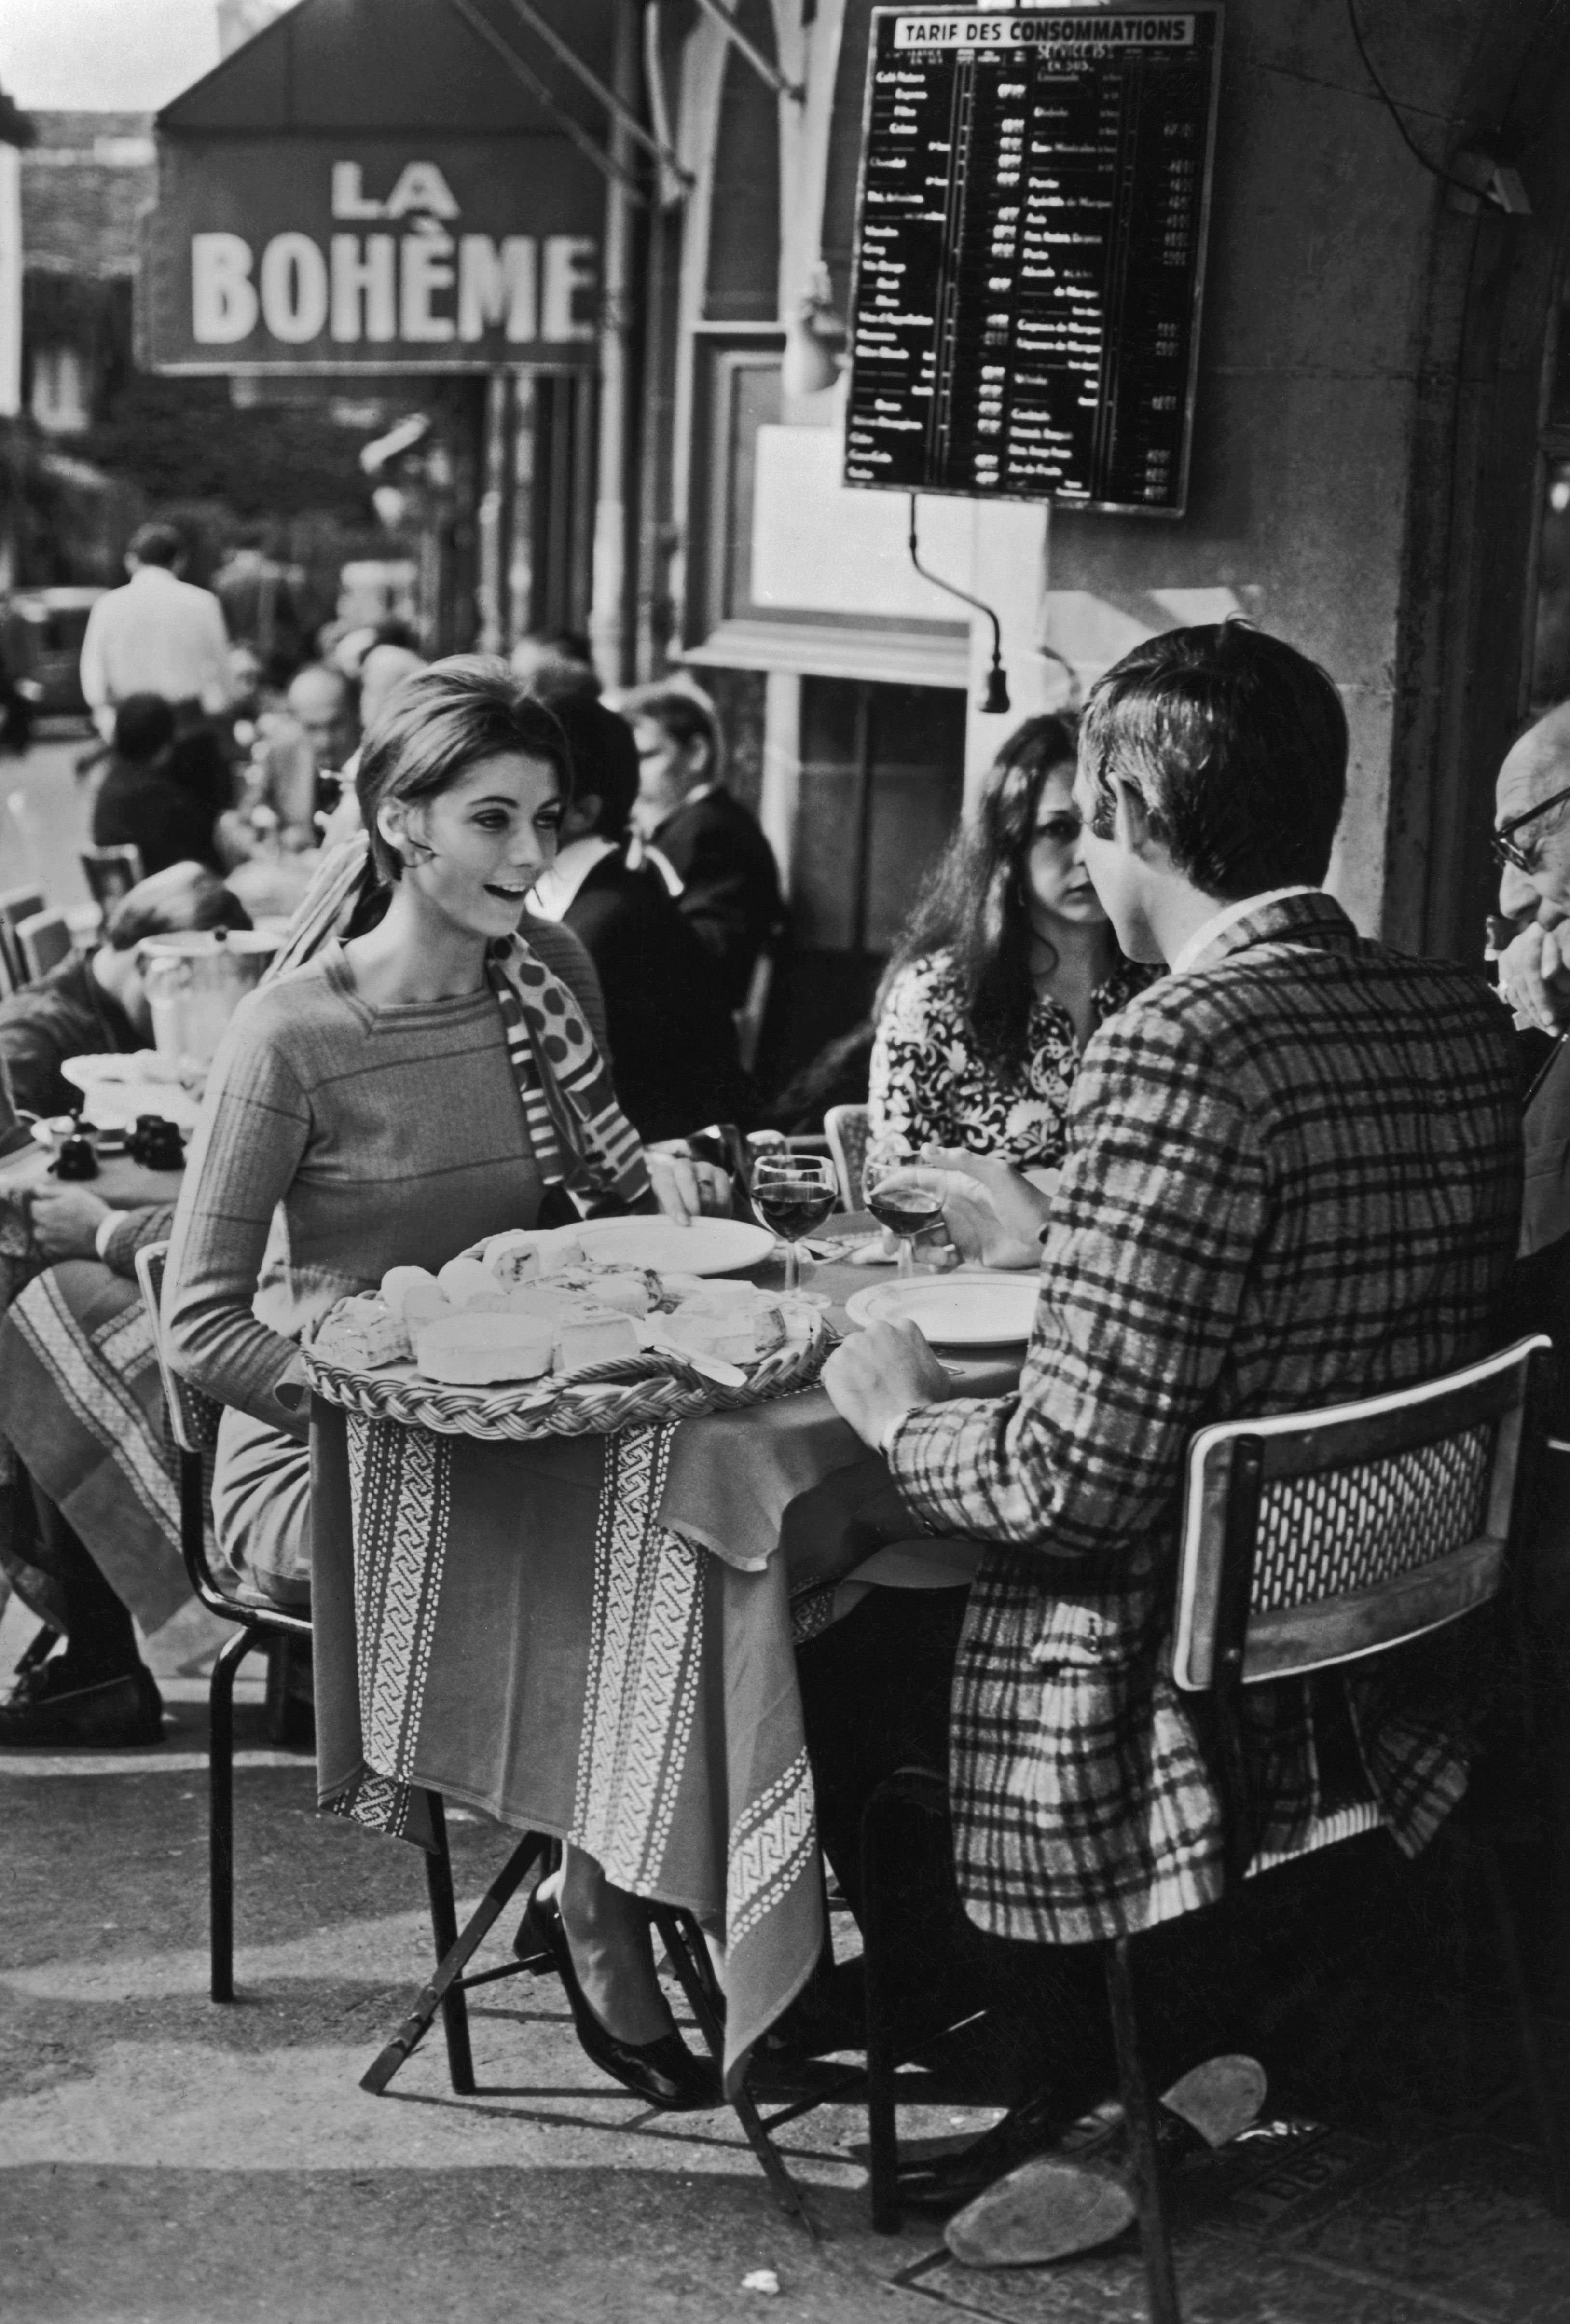 Vintage Photo Of Paris That Will Make You Wish For A Time Machine. Vintage paris, Vintage photography, Vintage photo